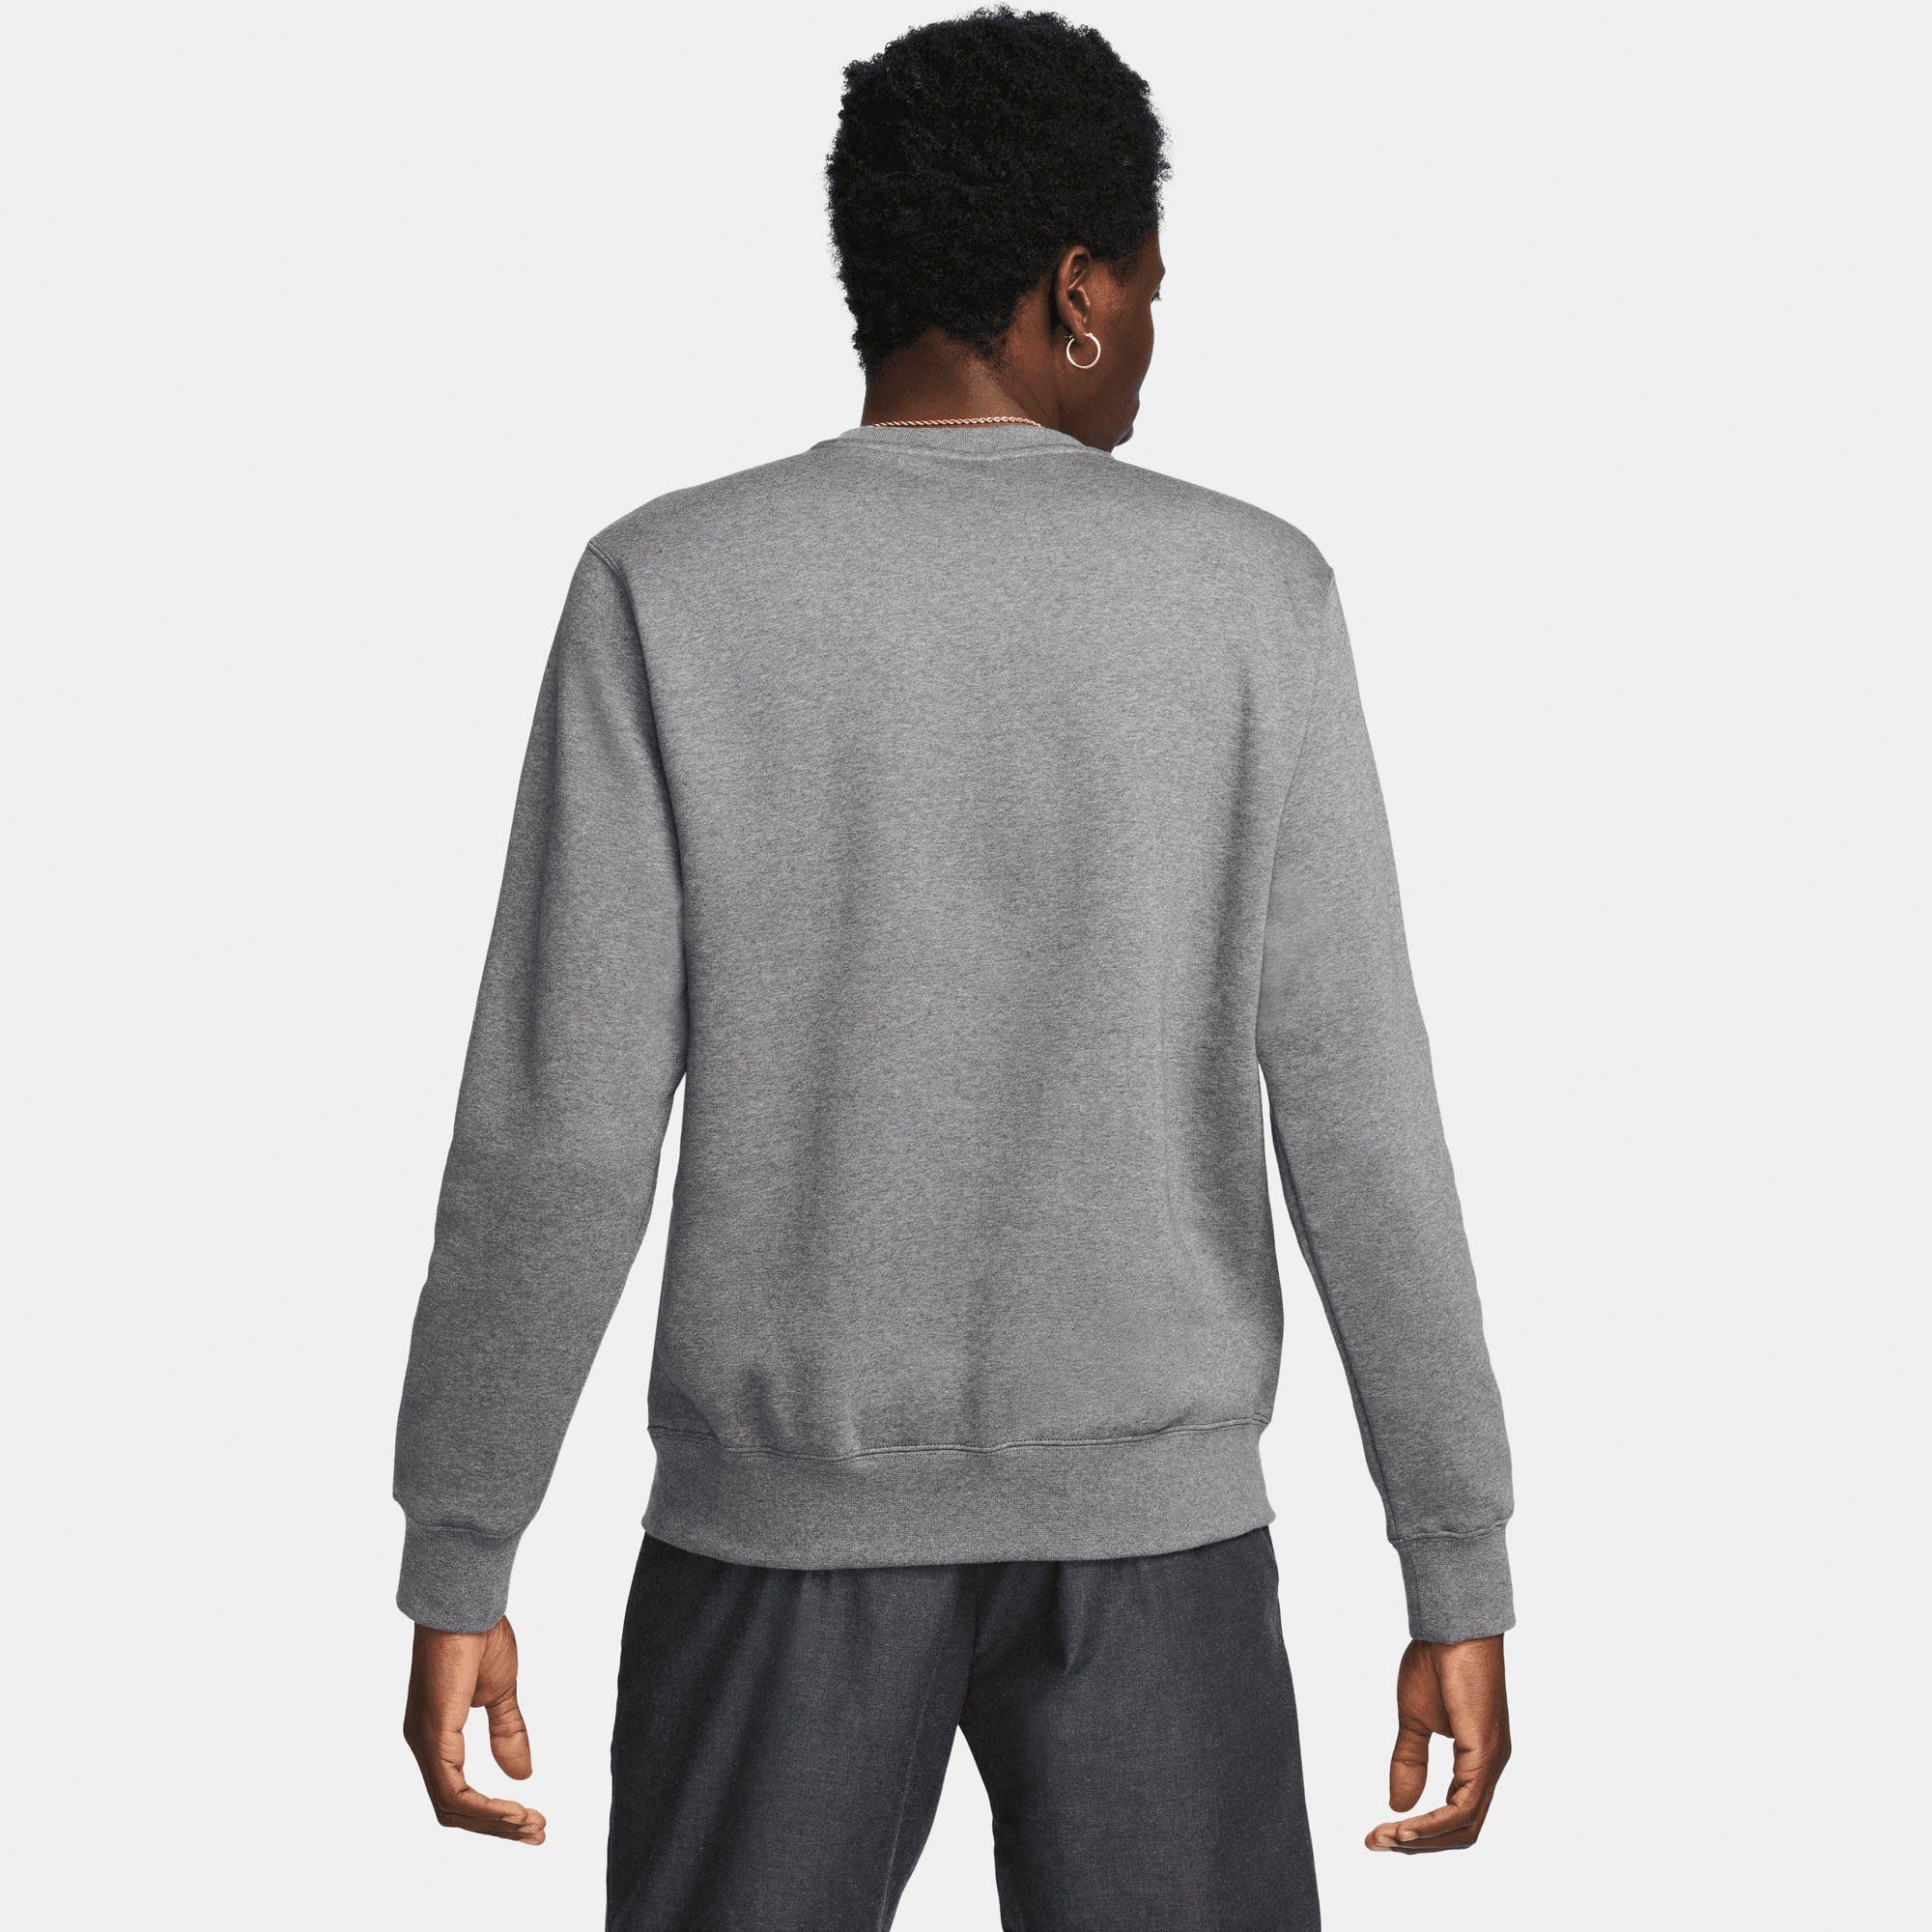 Crew Graphic CHARCOAL Fleece Sweatshirt Men's Nike Sportswear HEATHR Club